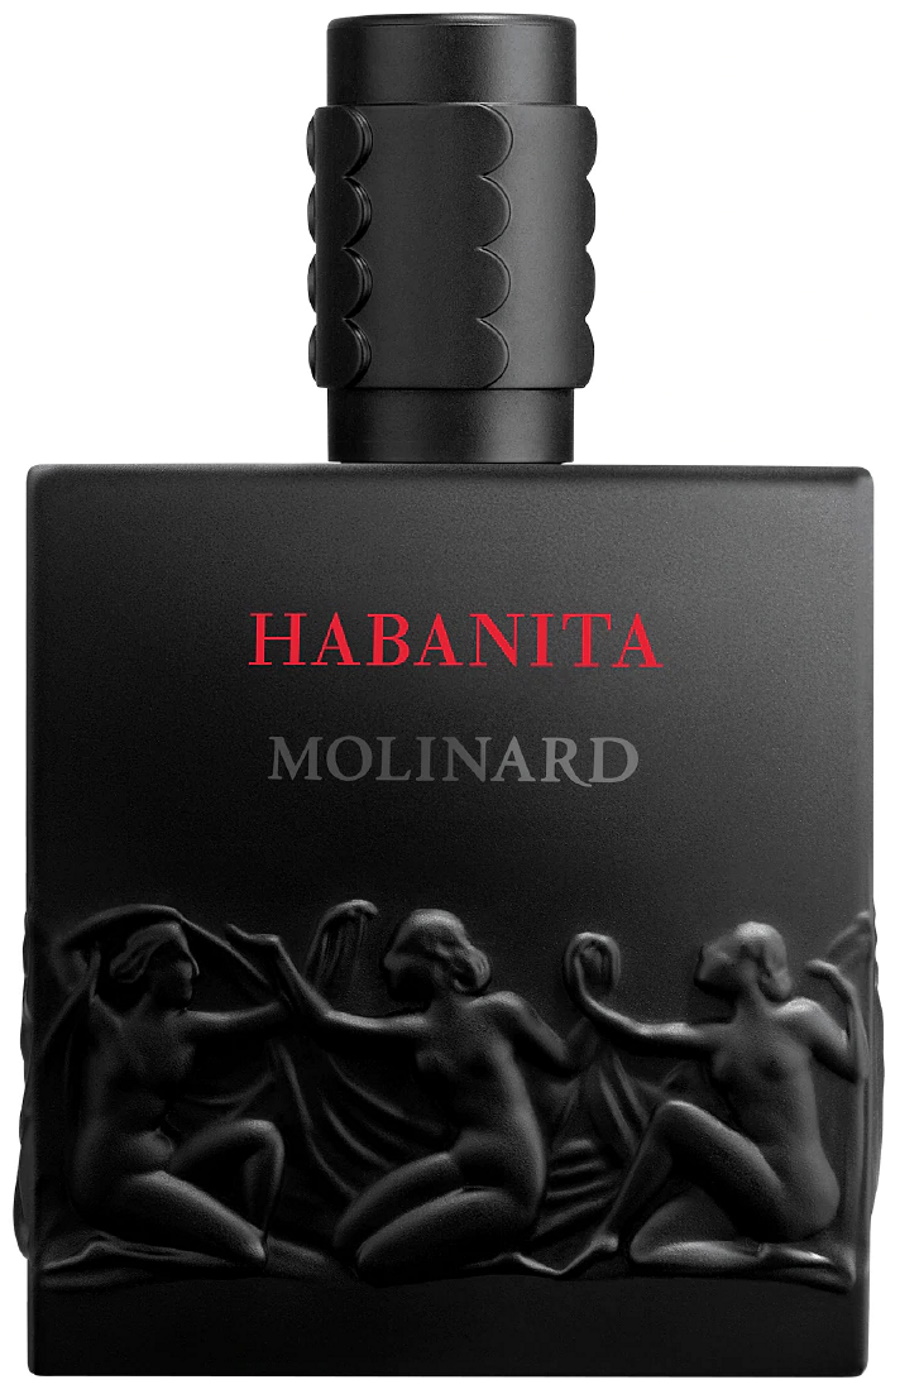 Habanita de Molinard : la réinterprétation 2012 